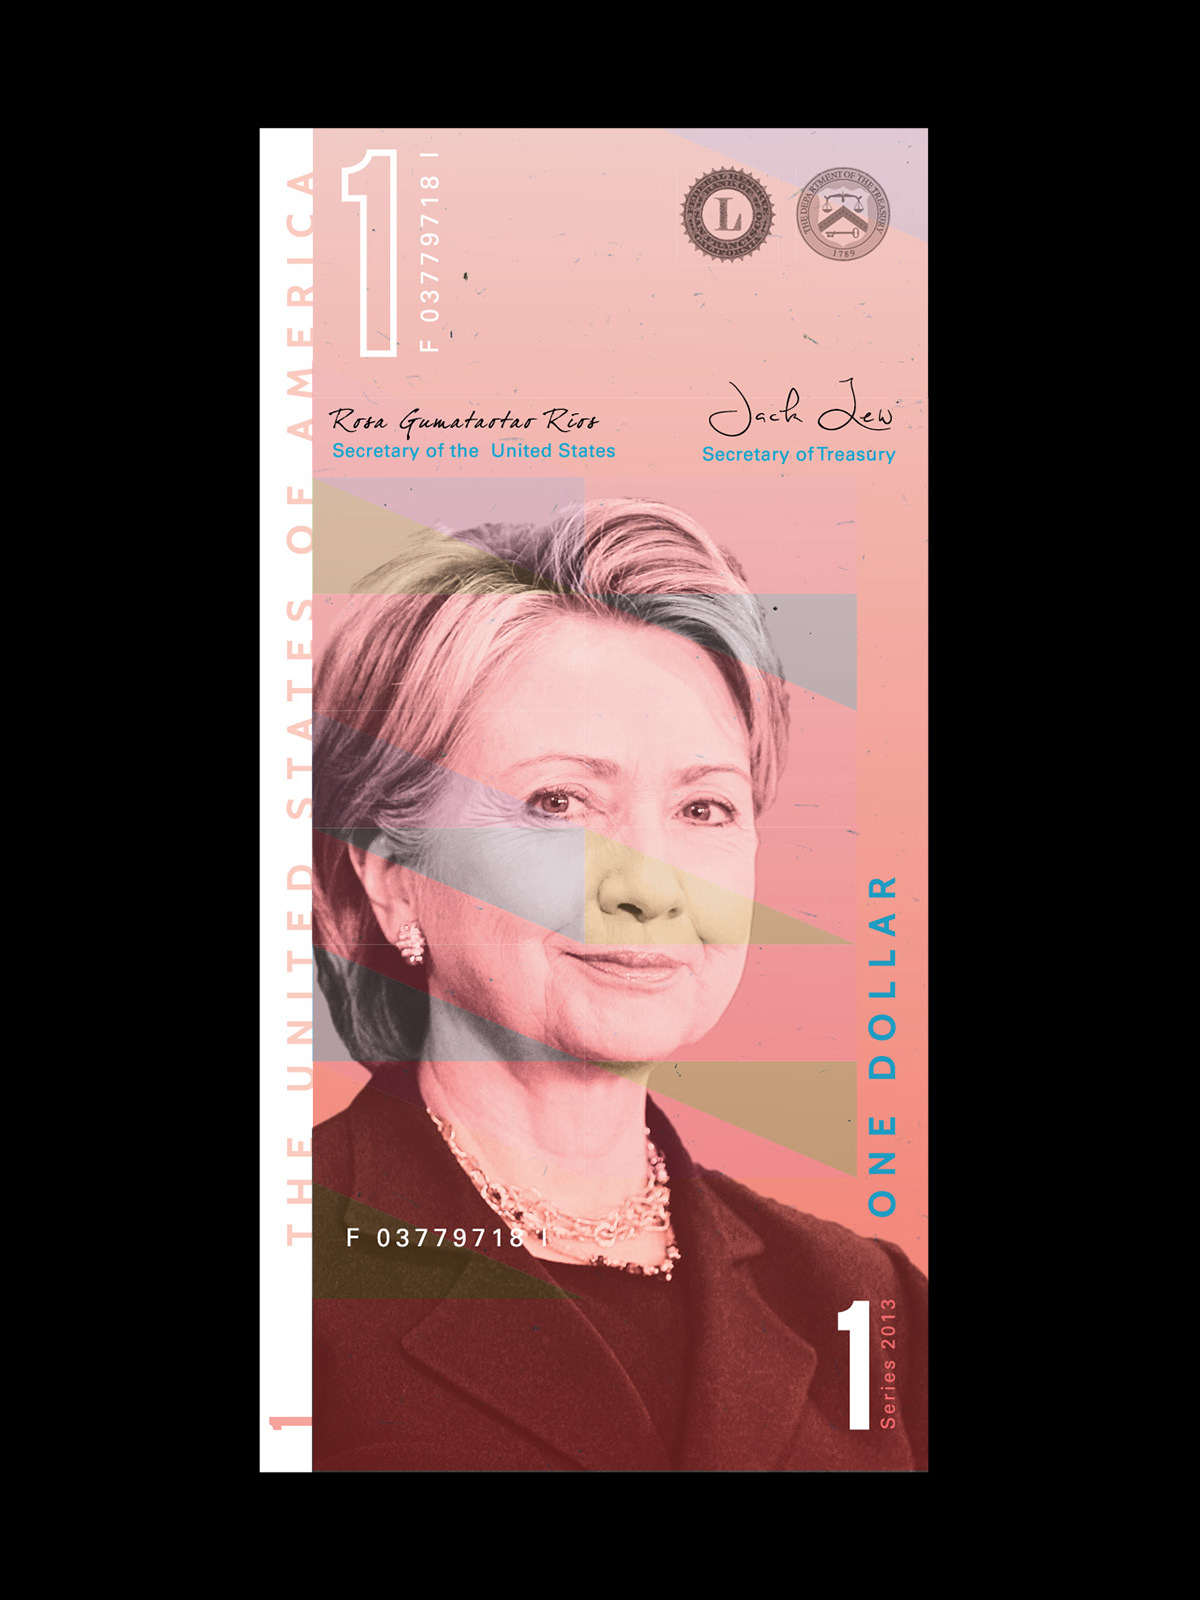 currency money united states Steve Jobs  oprah  Obama Hillary Clinton dollar